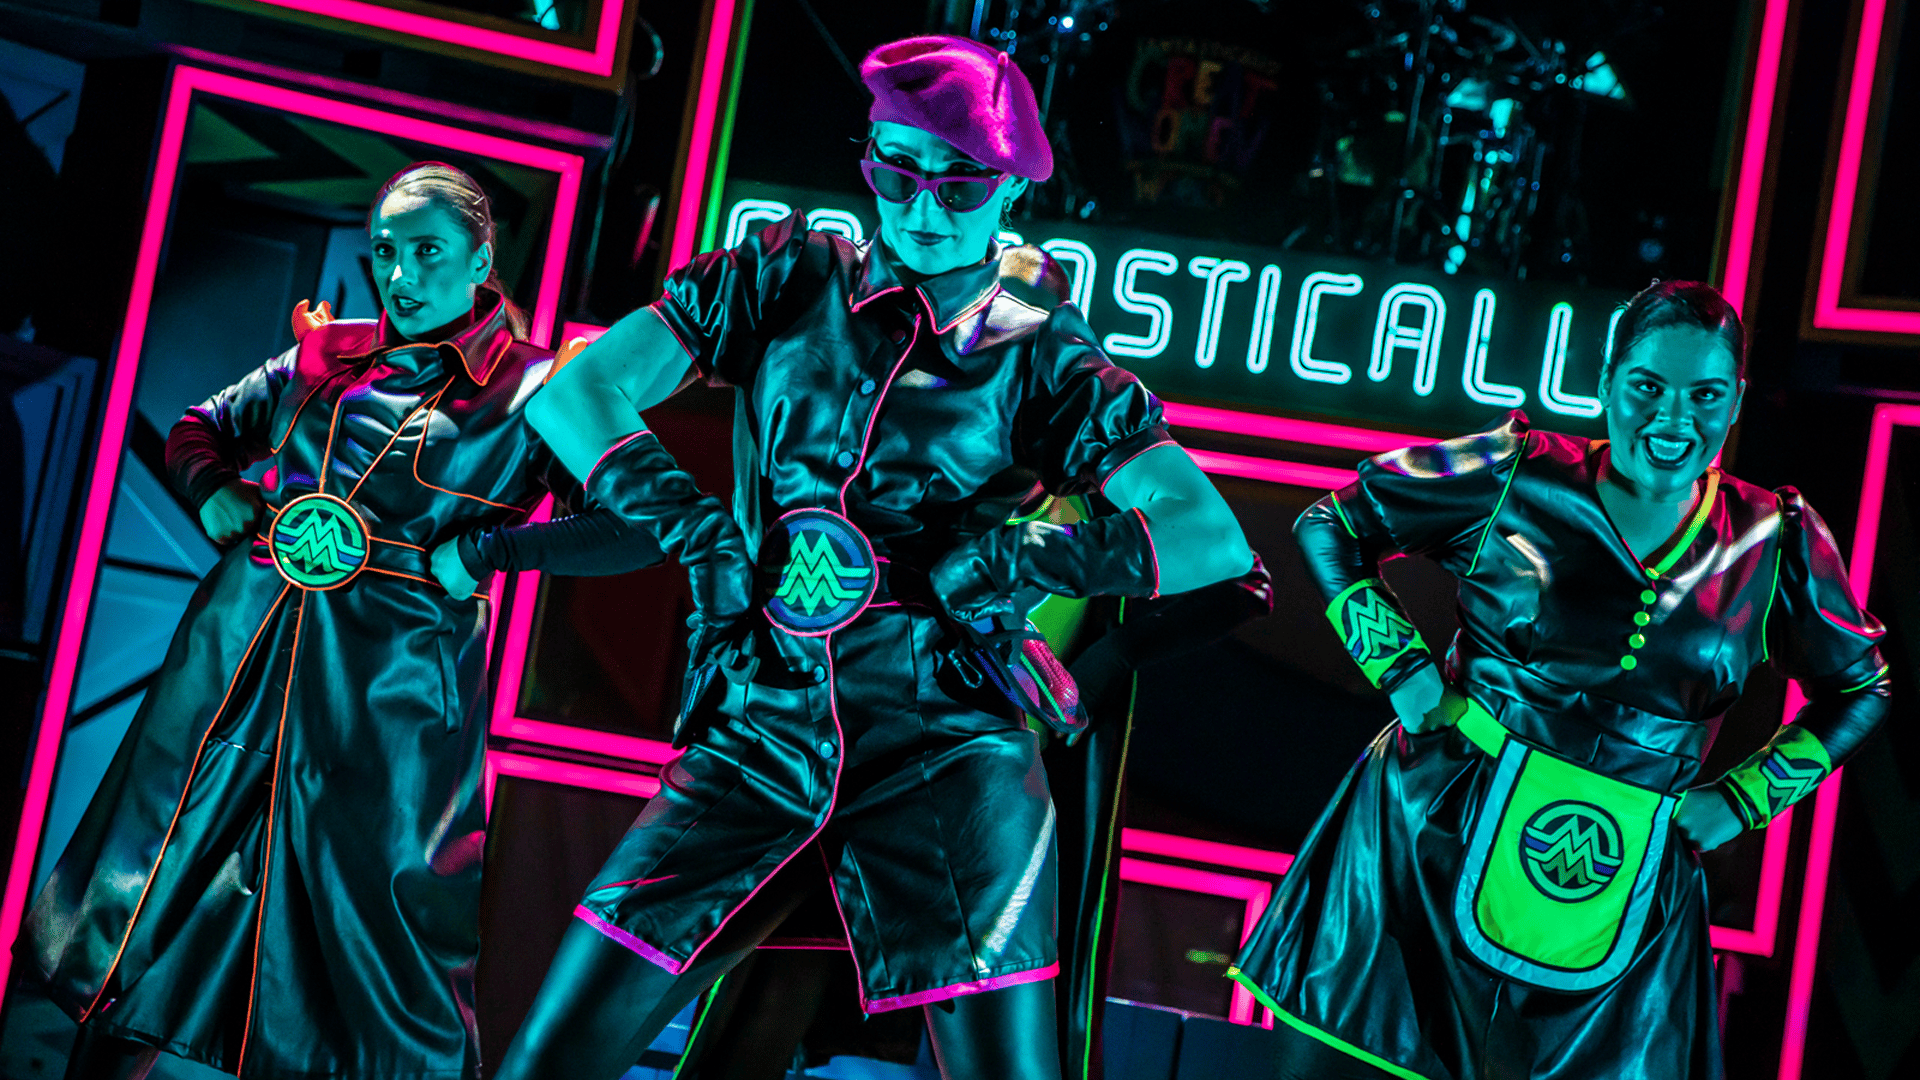 Three performers under neon lighting striking a pose